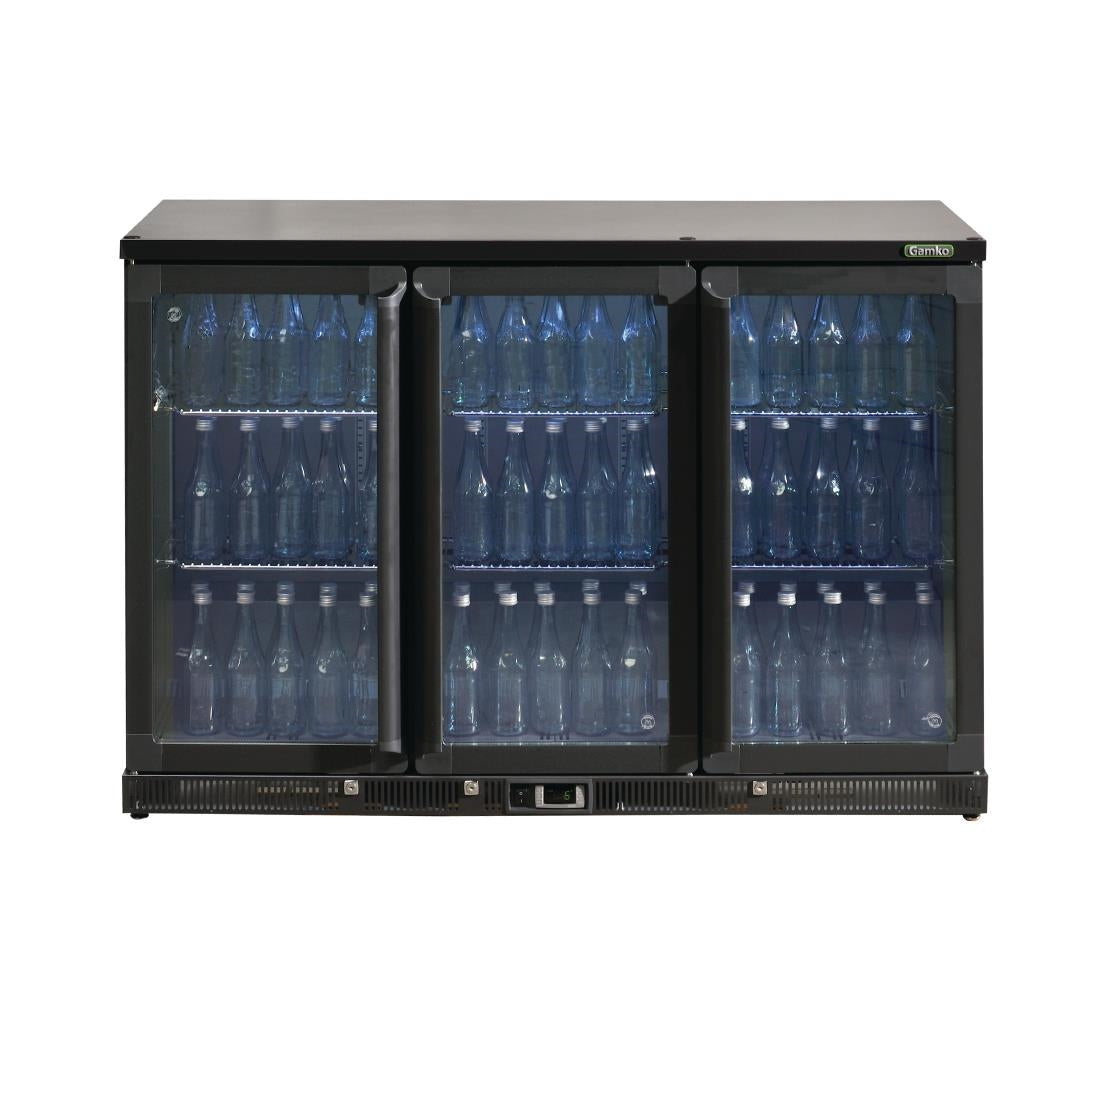 Gamko Bottle Cooler - Triple Hinged Door 315 Ltr Black JD Catering Equipment Solutions Ltd